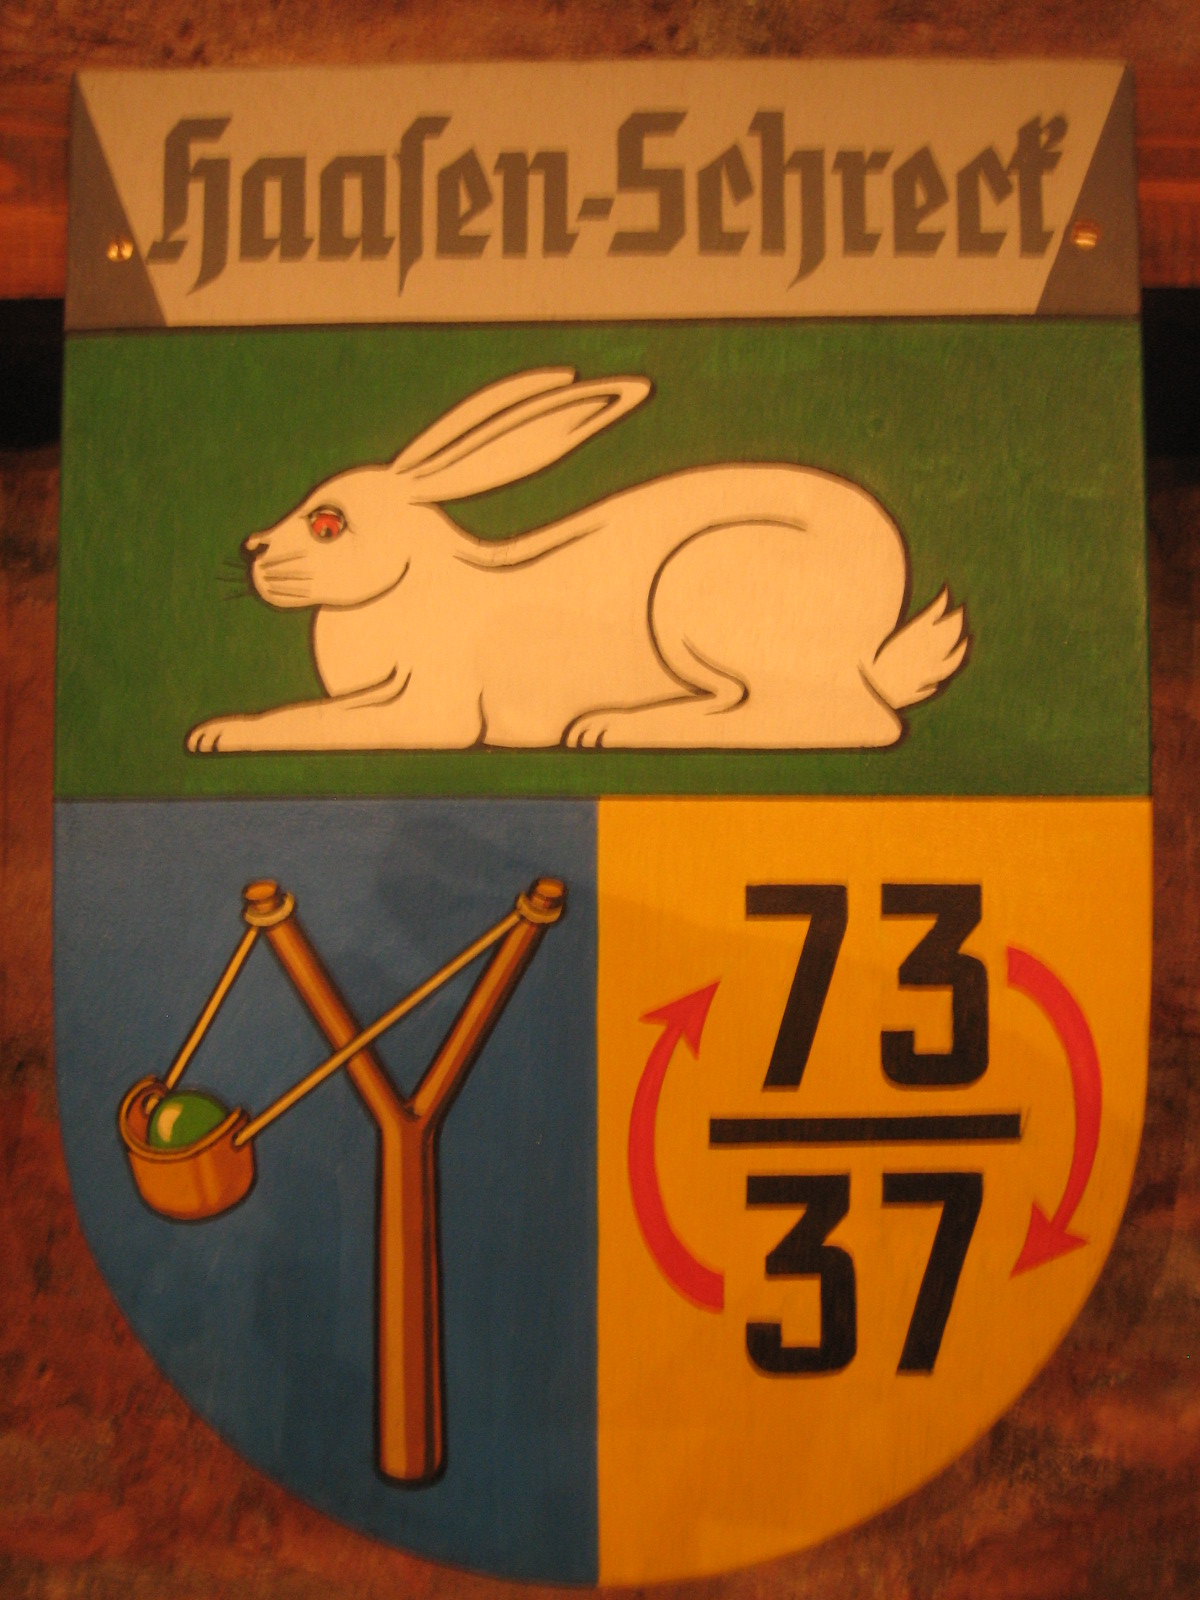 Wappen Rt Haasen-Schreck